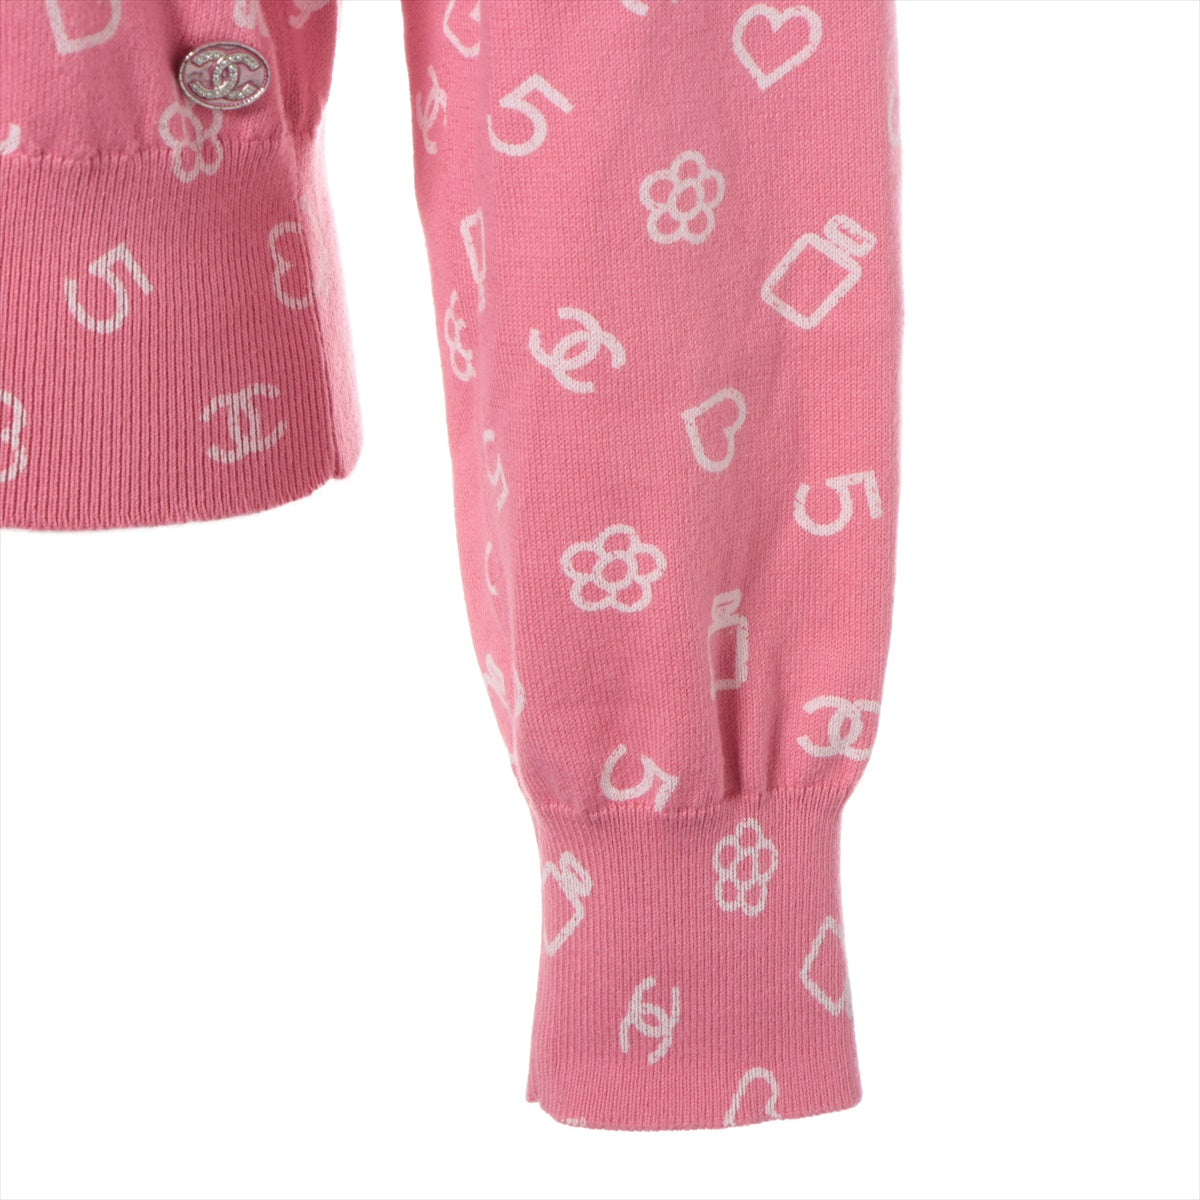 Chanel Coco Button Cotton & Polyurethane Knit 36 Ladies' Pink  P74102 Brand retagging